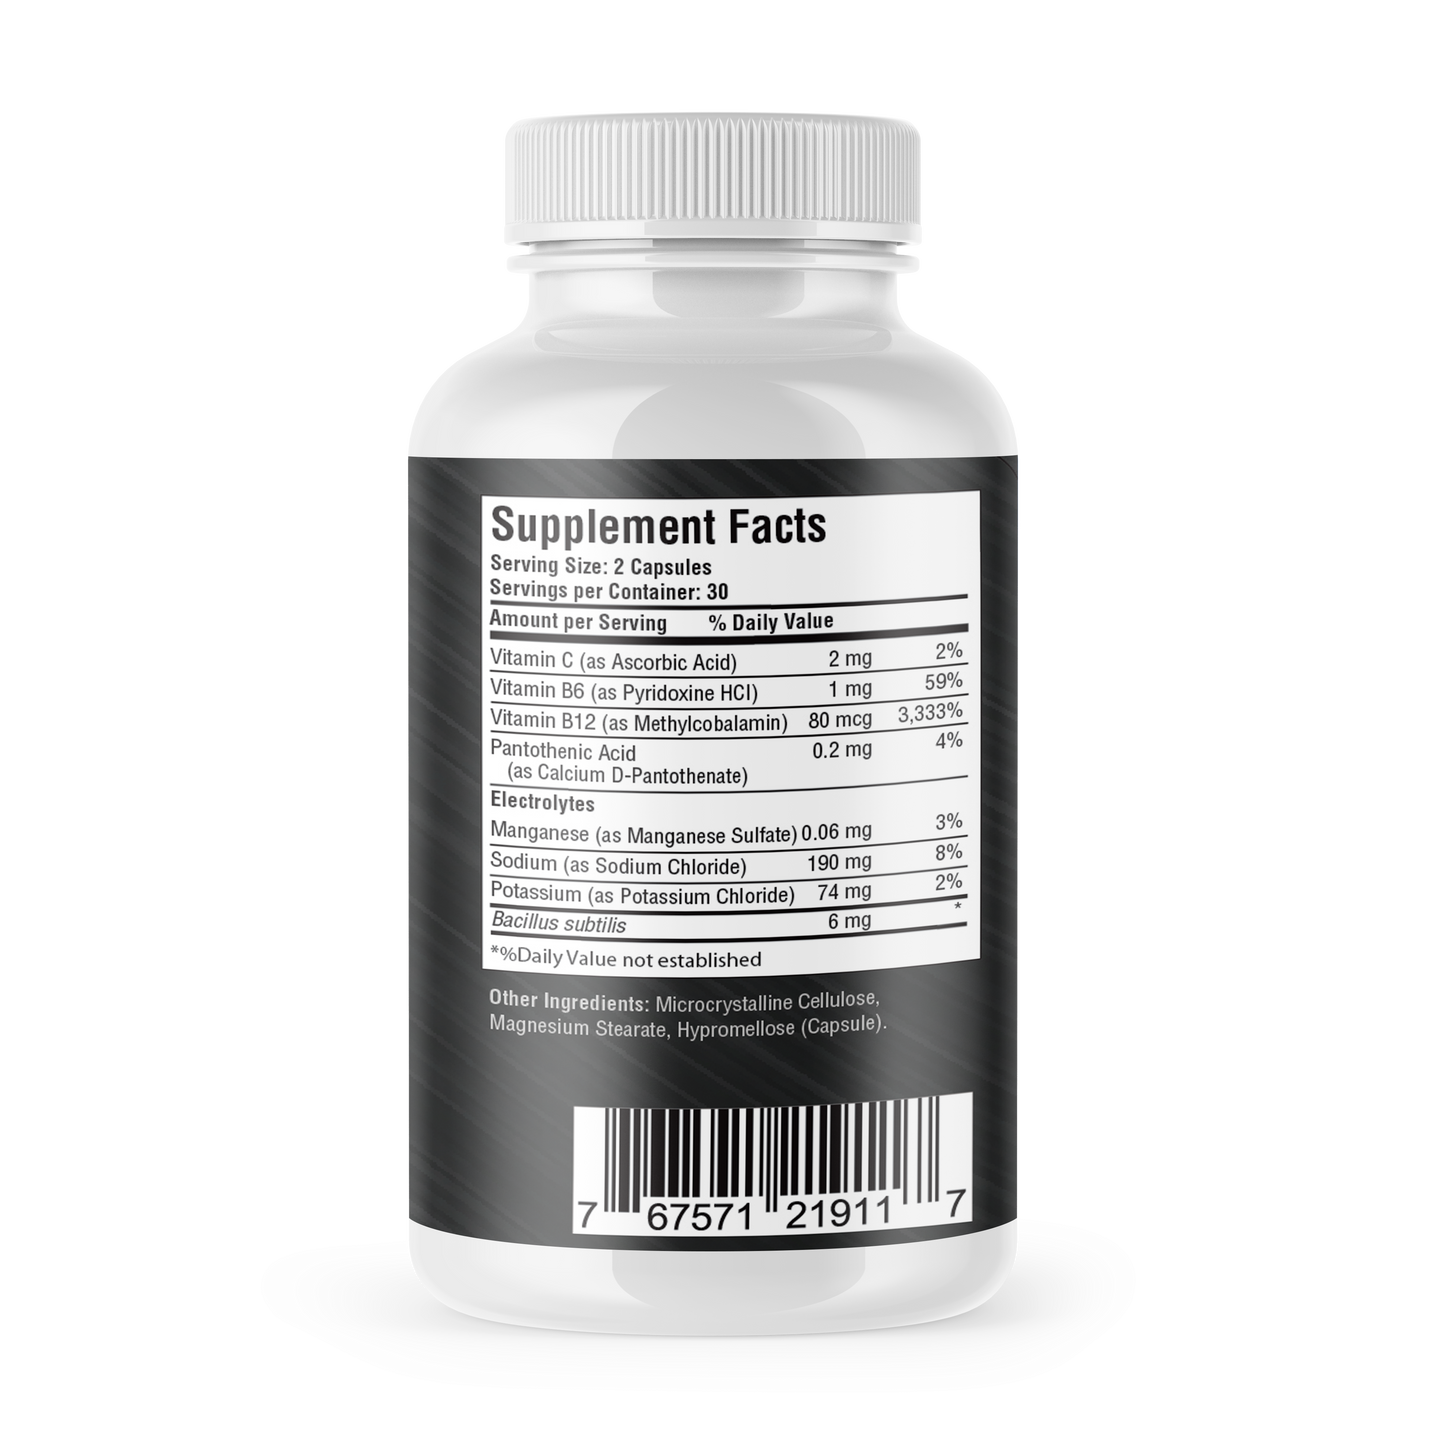 Probaxstra Sport - Superstrain Probiotic + Electrolytes (2 Pack)